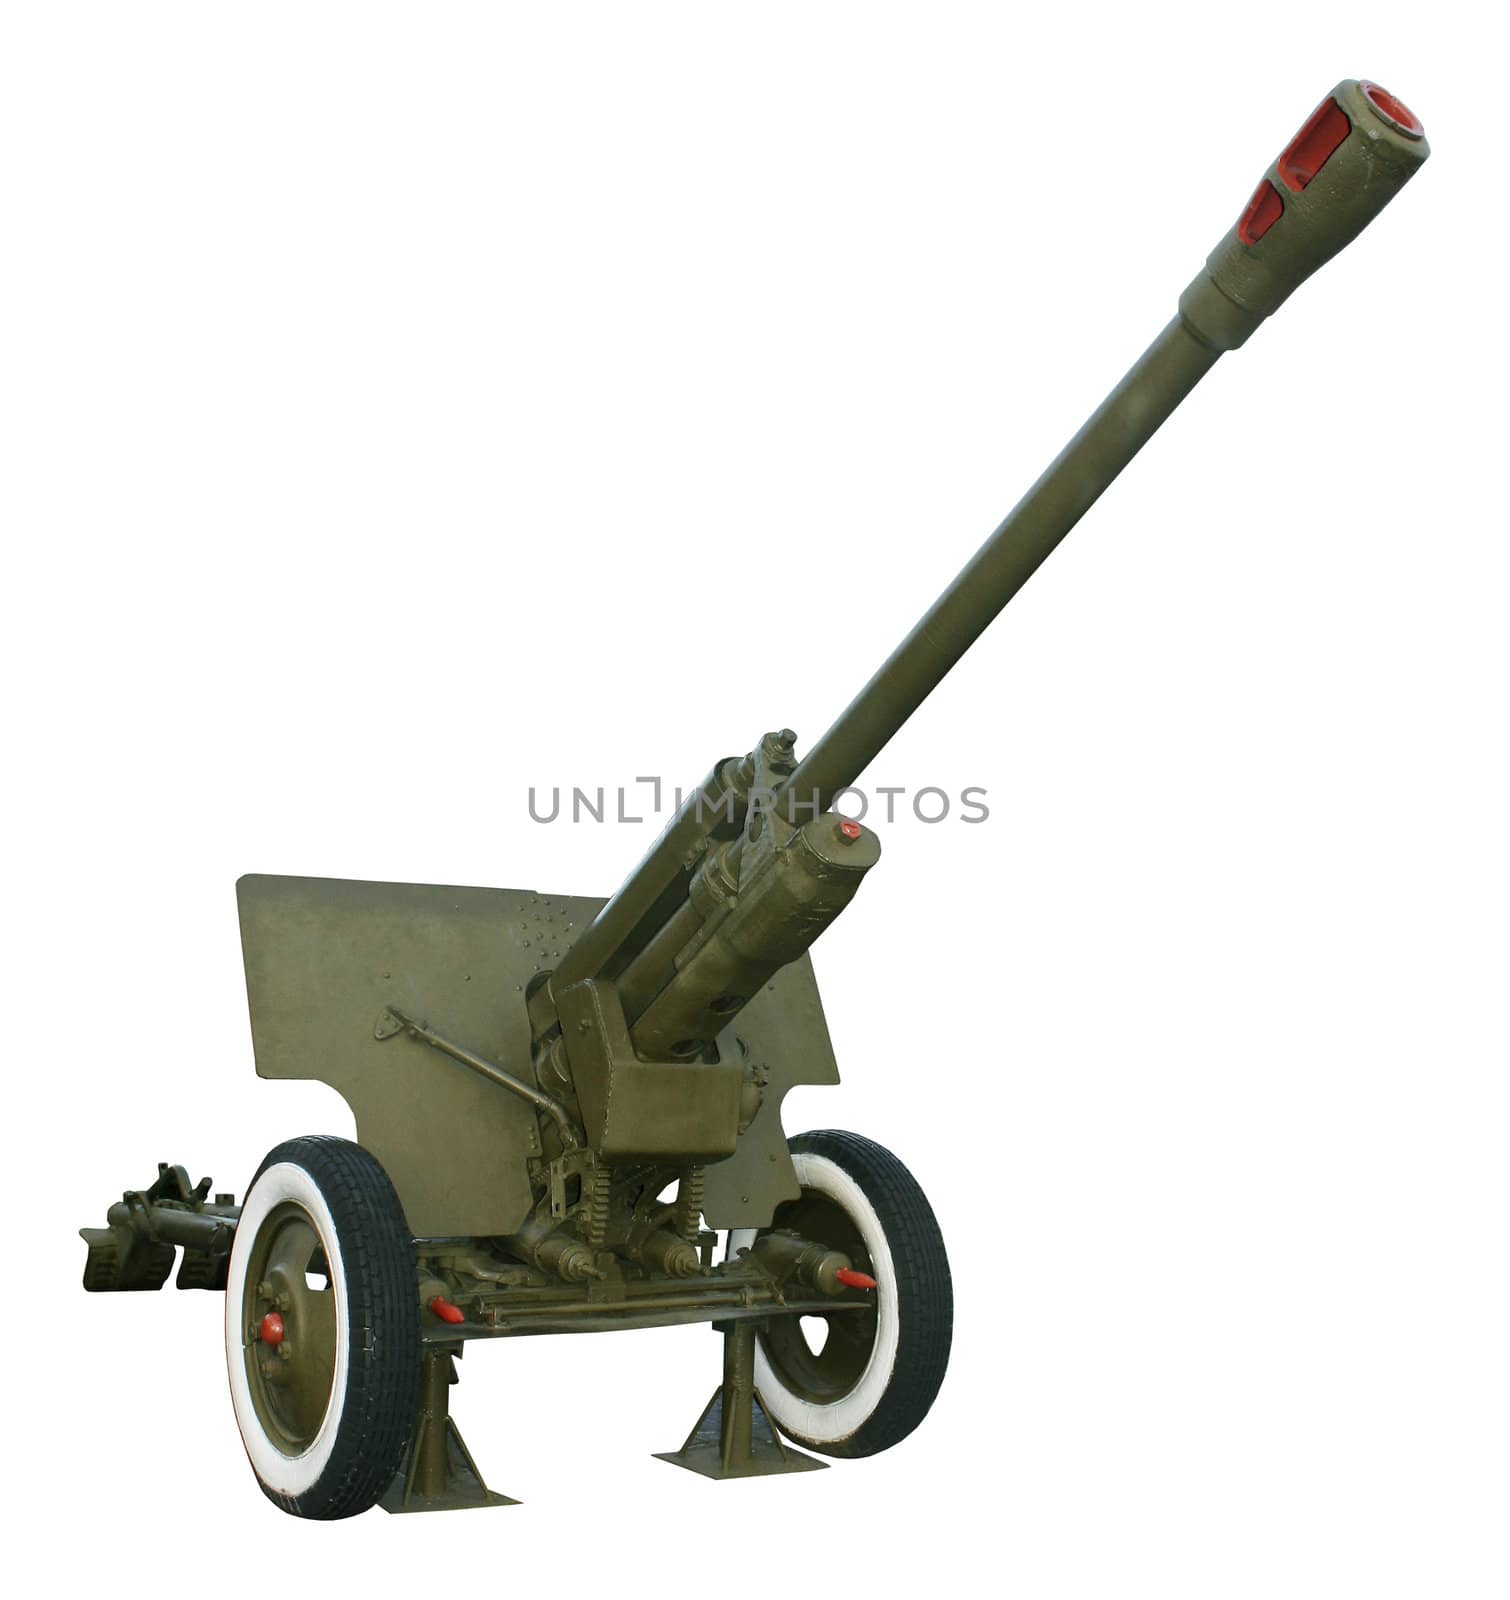 Artillery Gun by Shmer